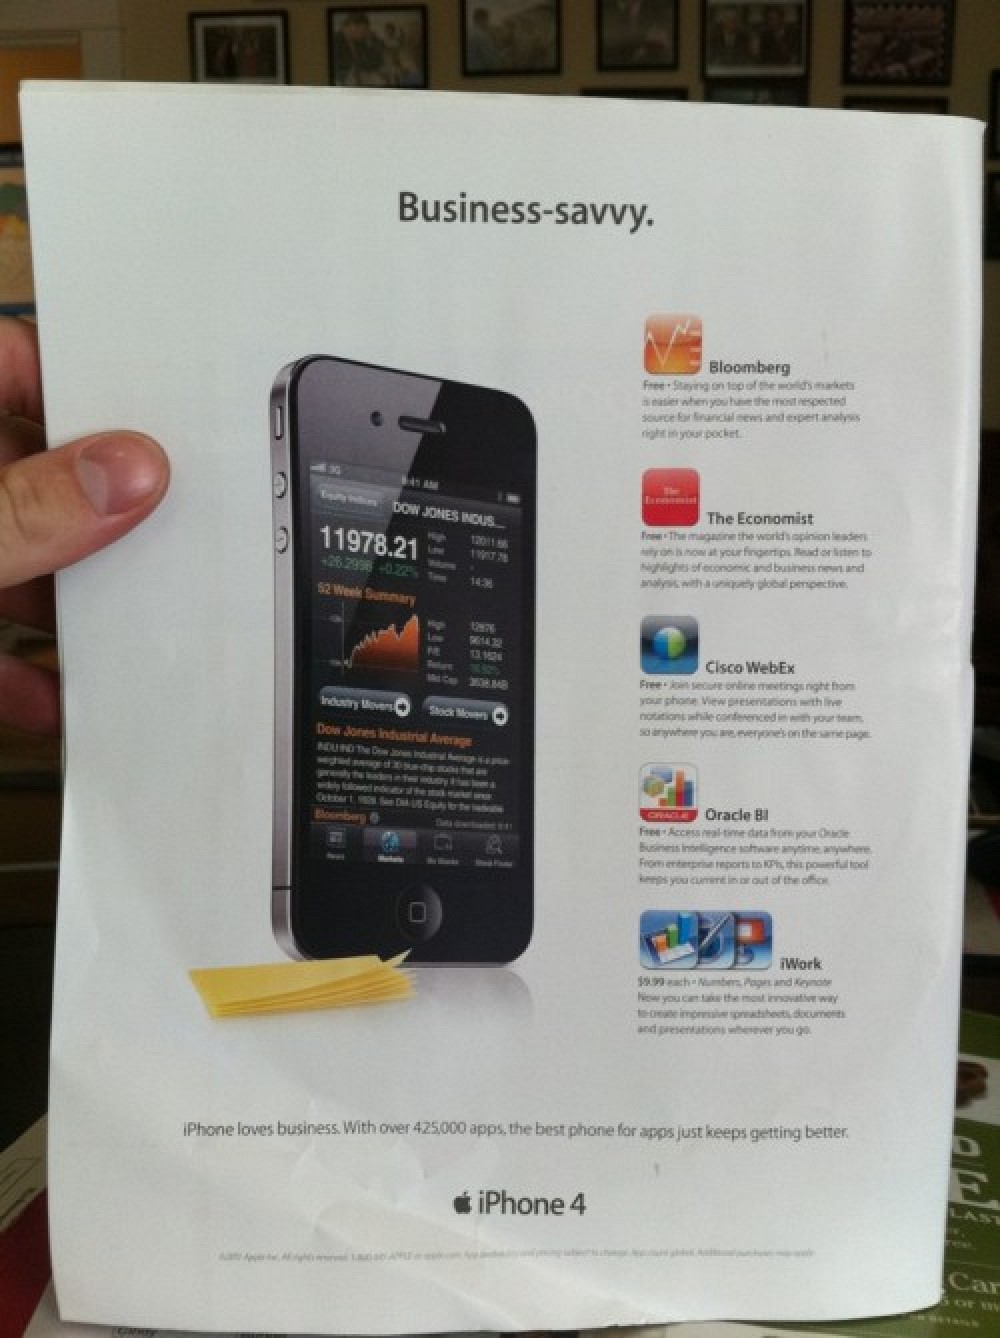 New Apple Print Ad Touts iPhone's Business Savvy - MacRumors